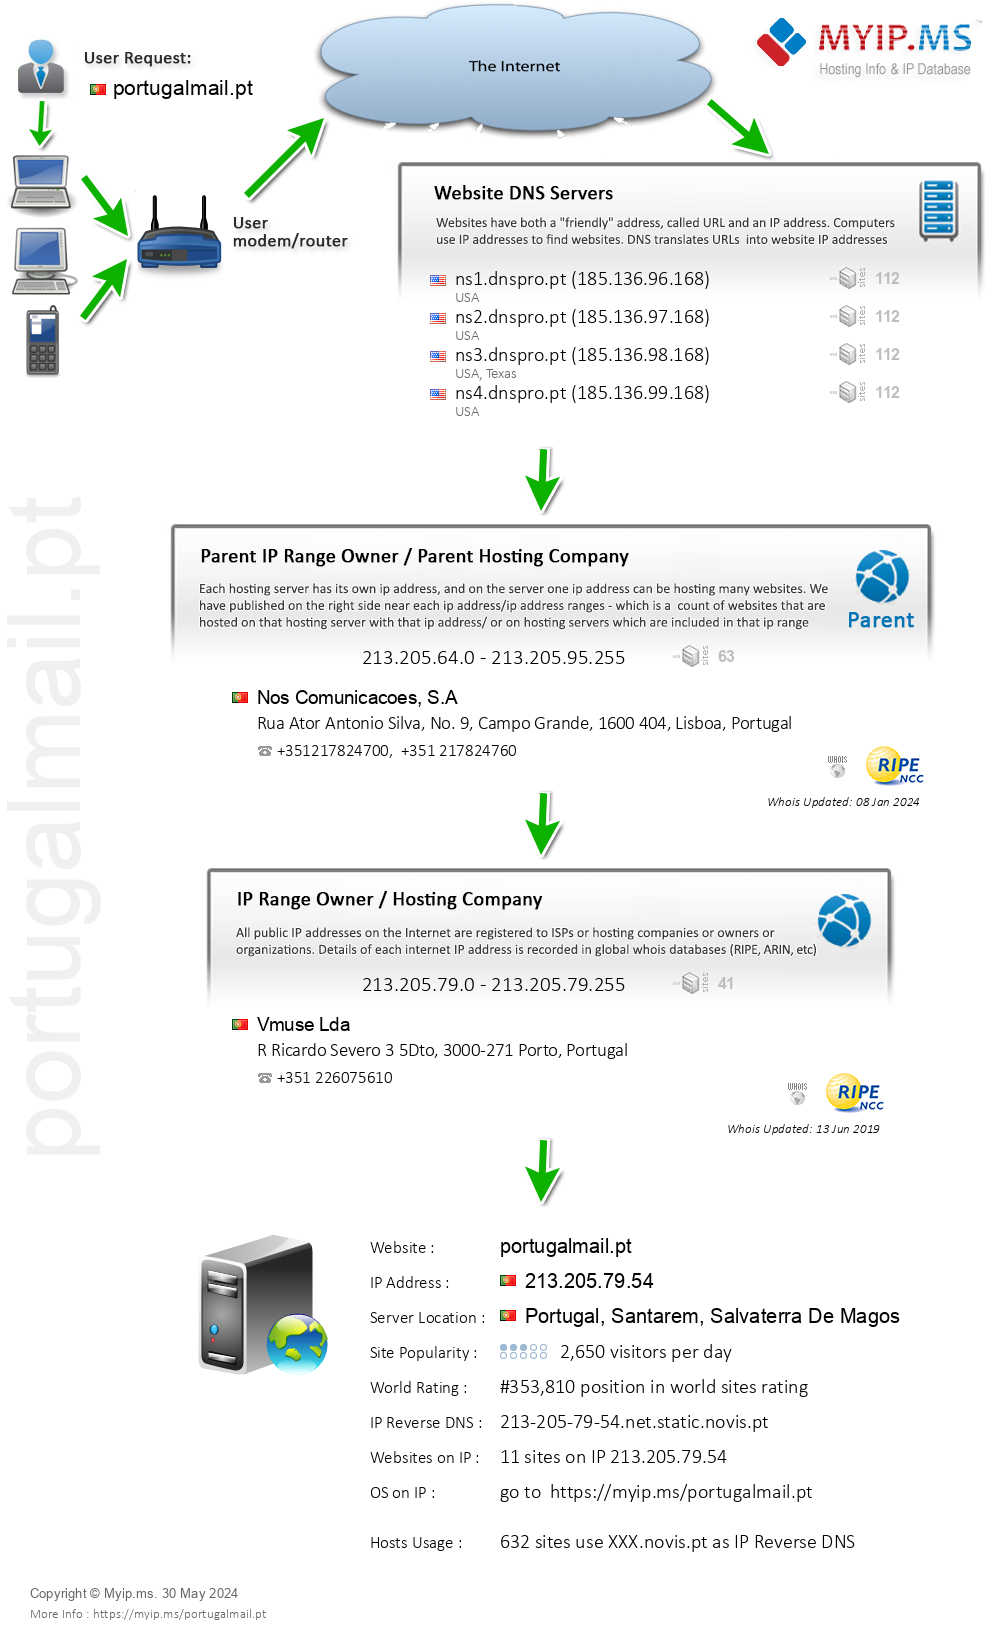 Portugalmail.pt - Website Hosting Visual IP Diagram